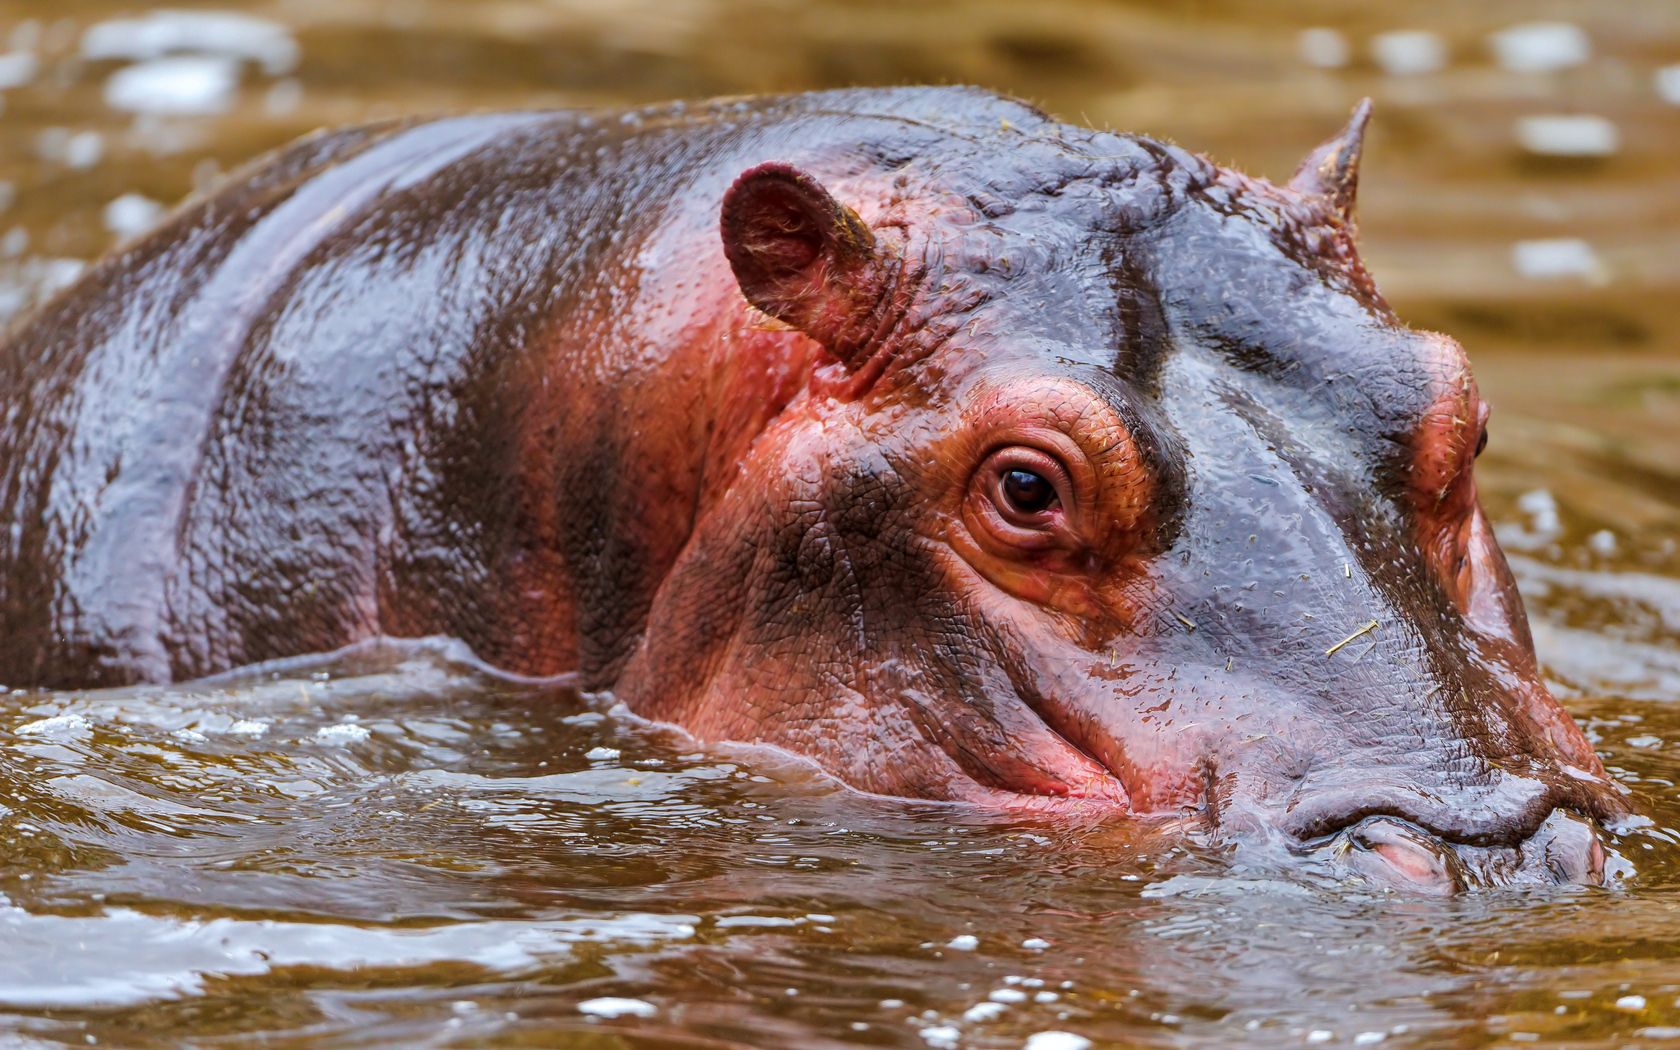 117254 descargar imagen caza, animales, agua, bozal, nadar, acosar, hipopótamo: fondos de pantalla y protectores de pantalla gratis